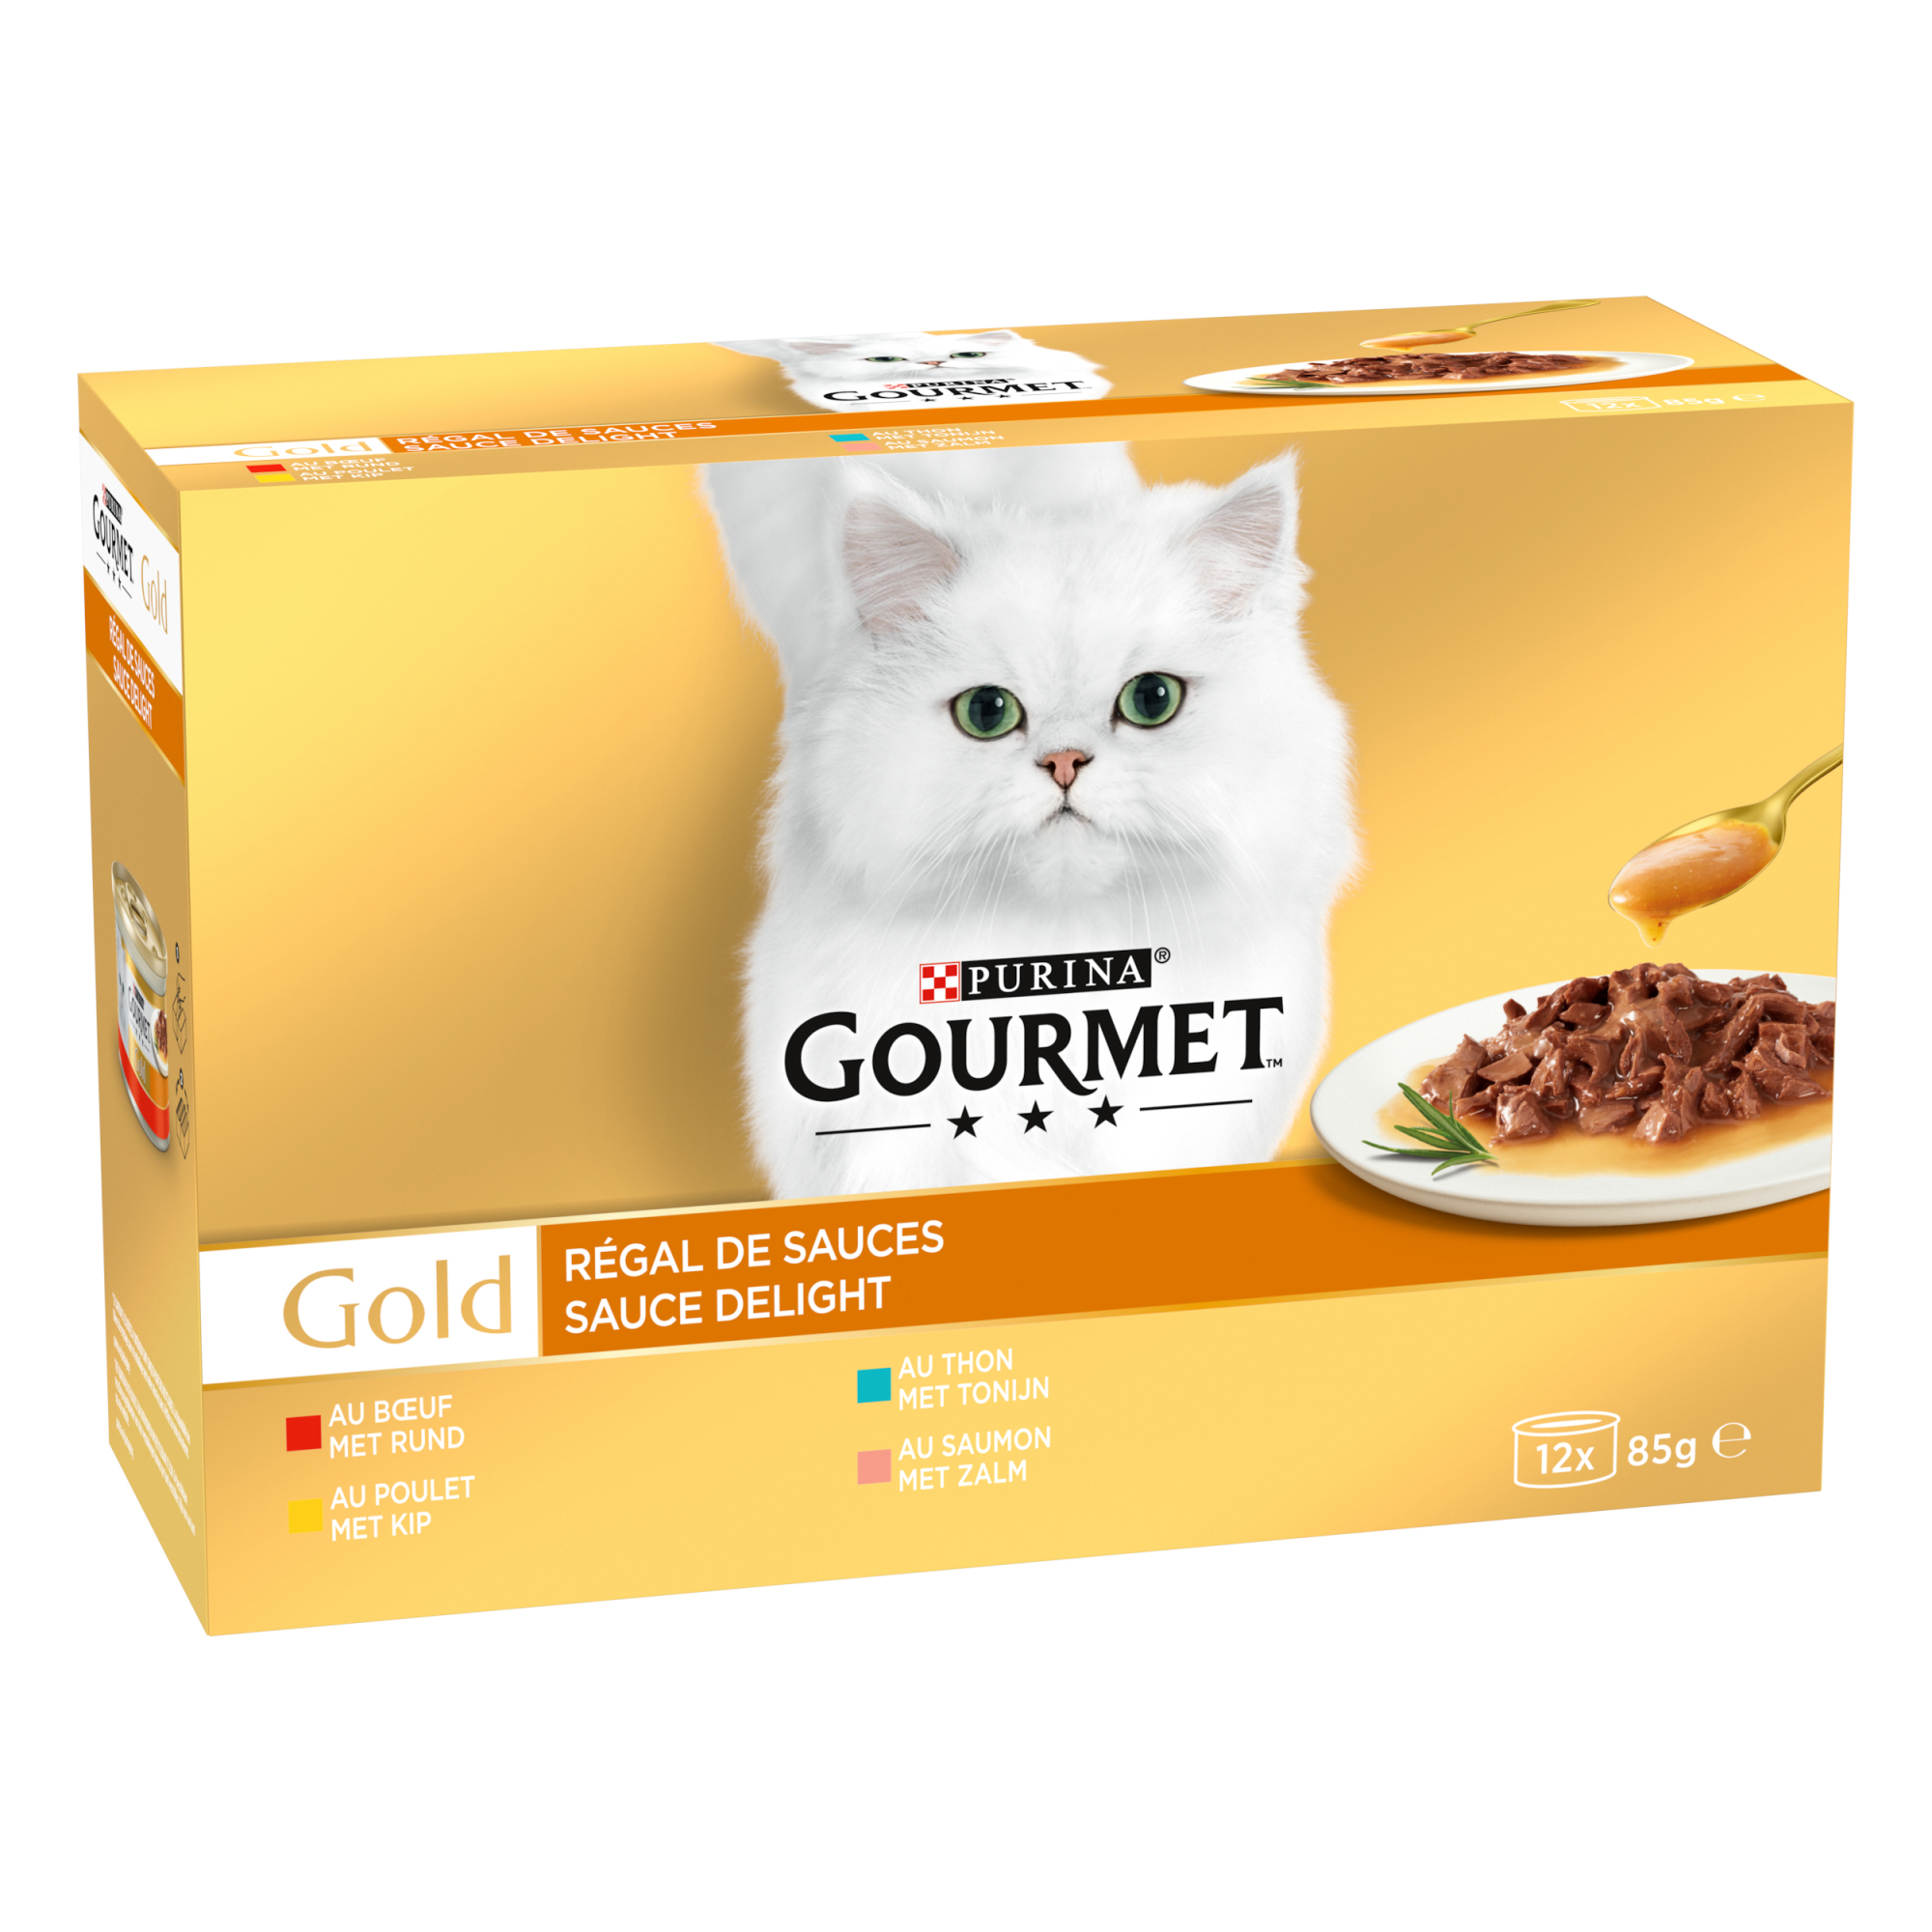 GOURMET GOLD Sauce Delight 12x85g